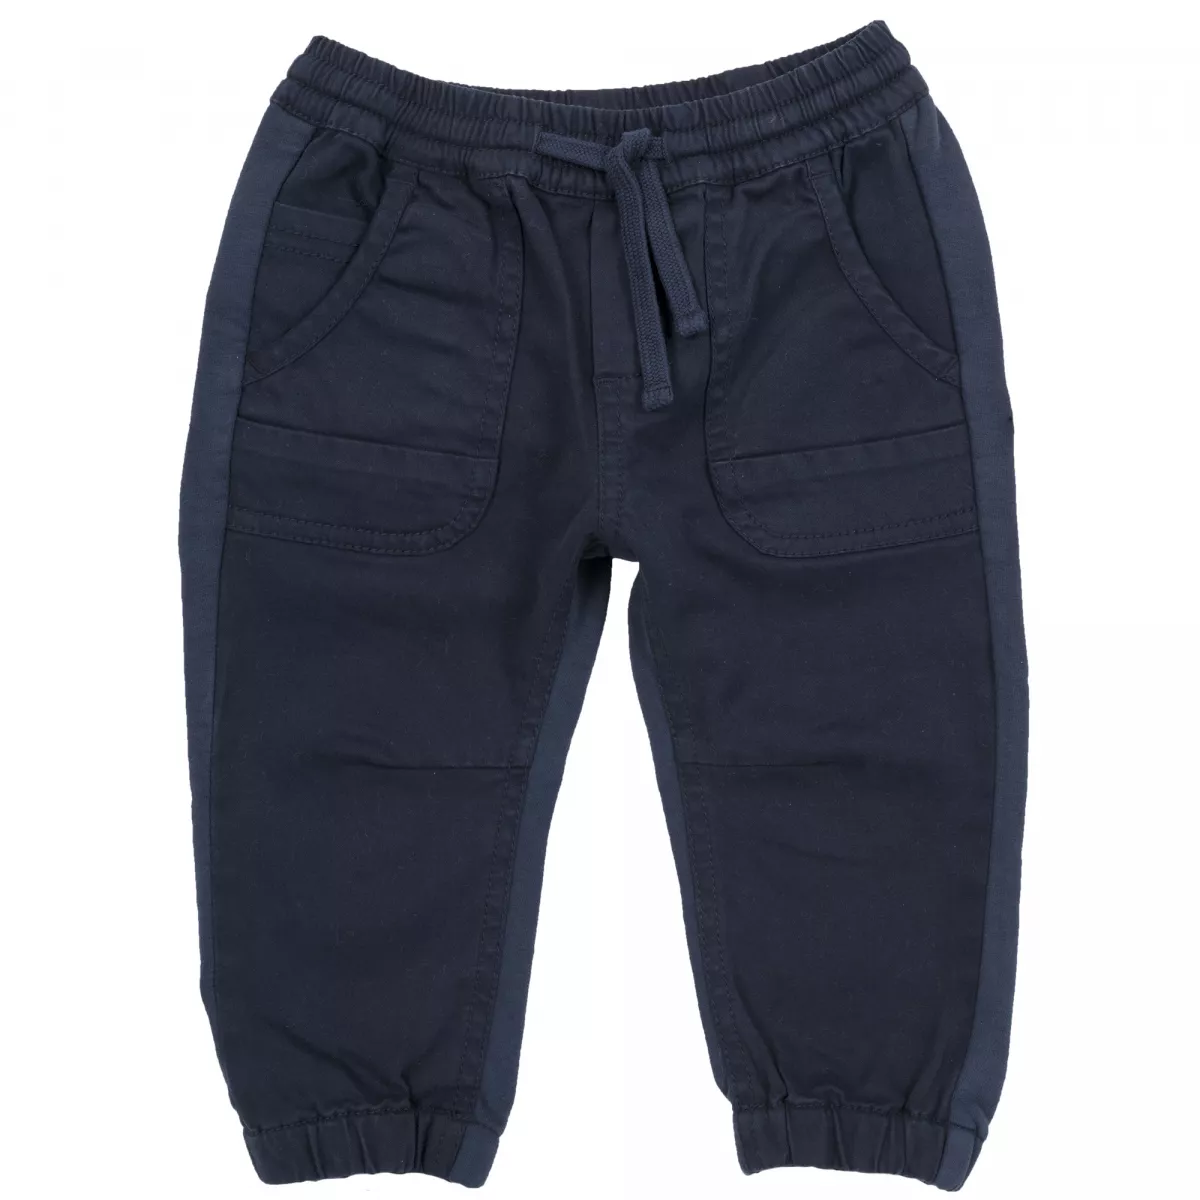 Pantalon copii Chicco, albastru inchis, 98